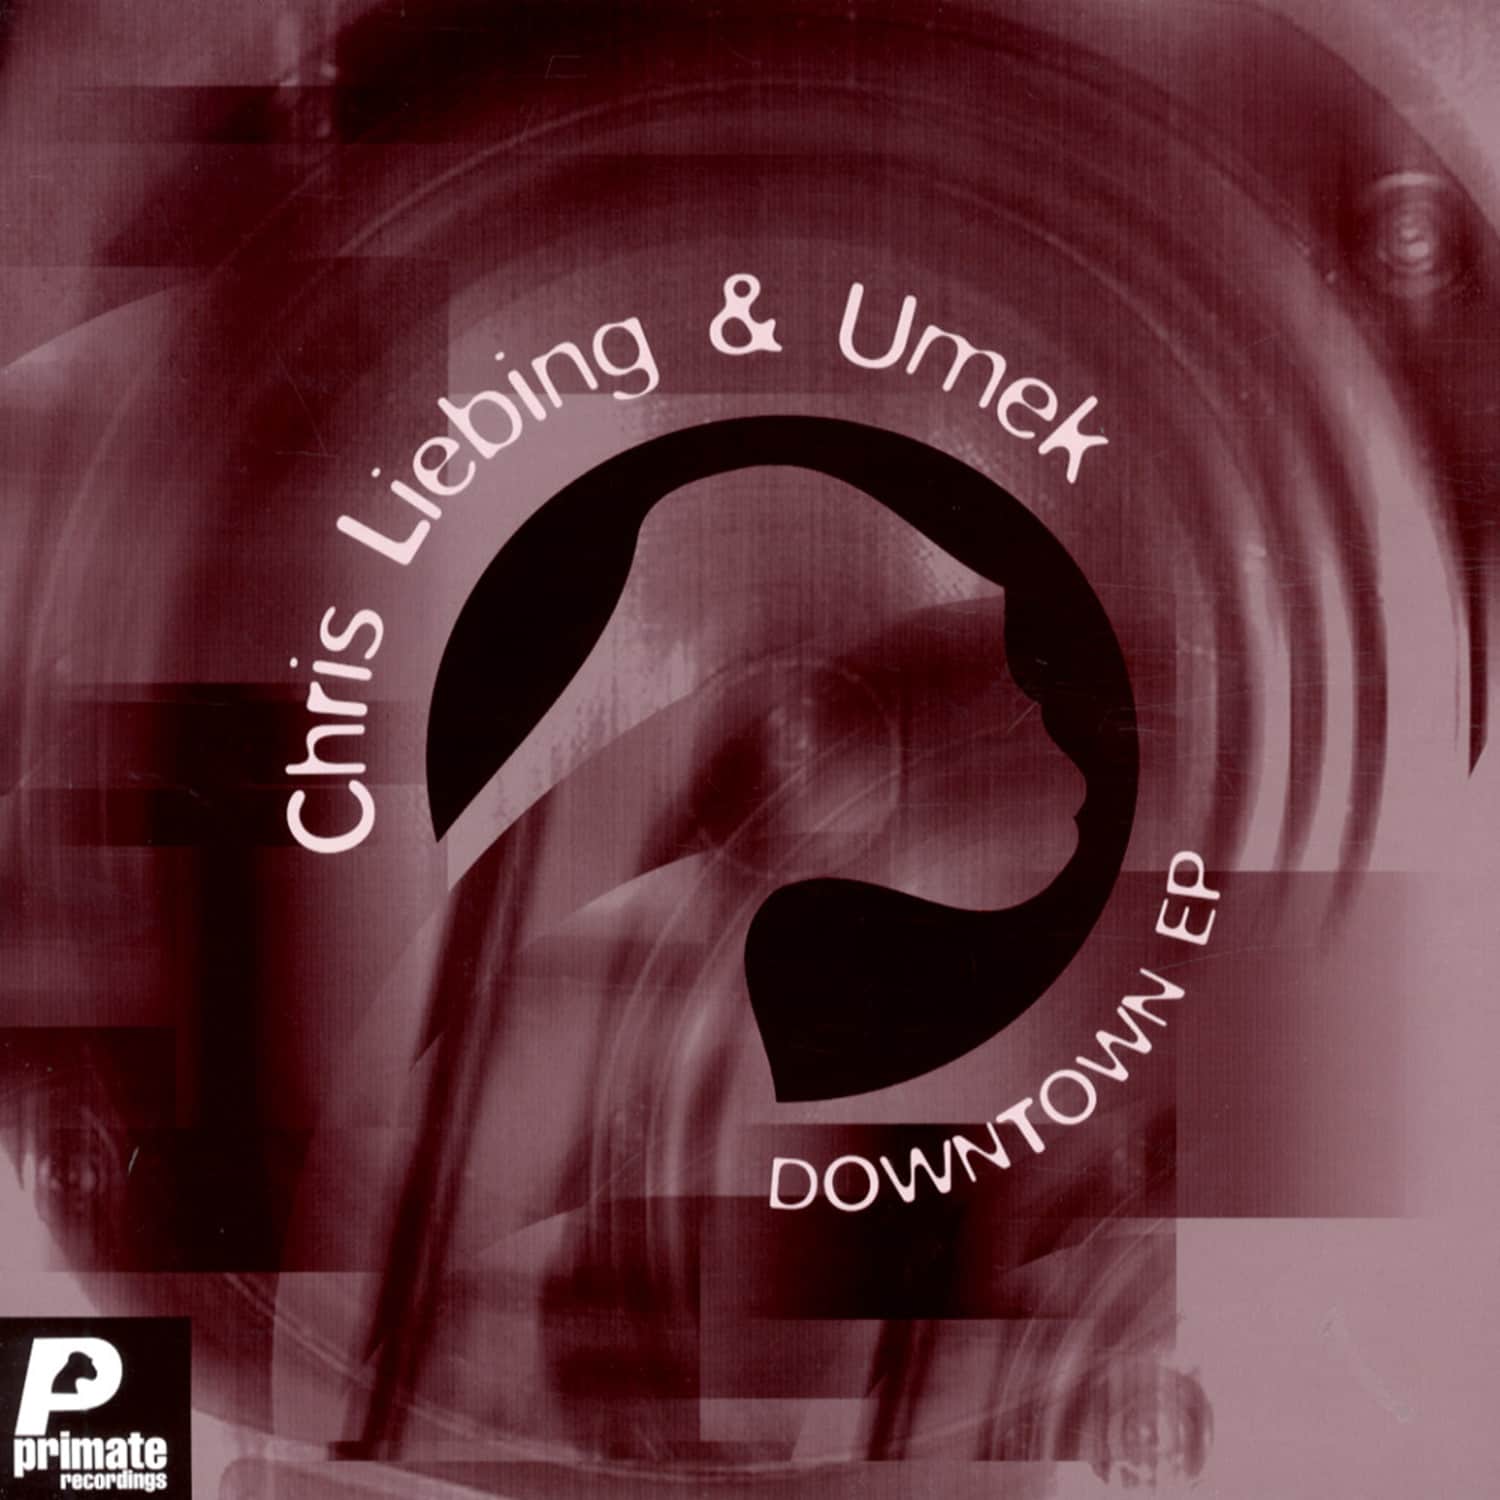 Chris Liebing & Umek - DOWNTOWN EP